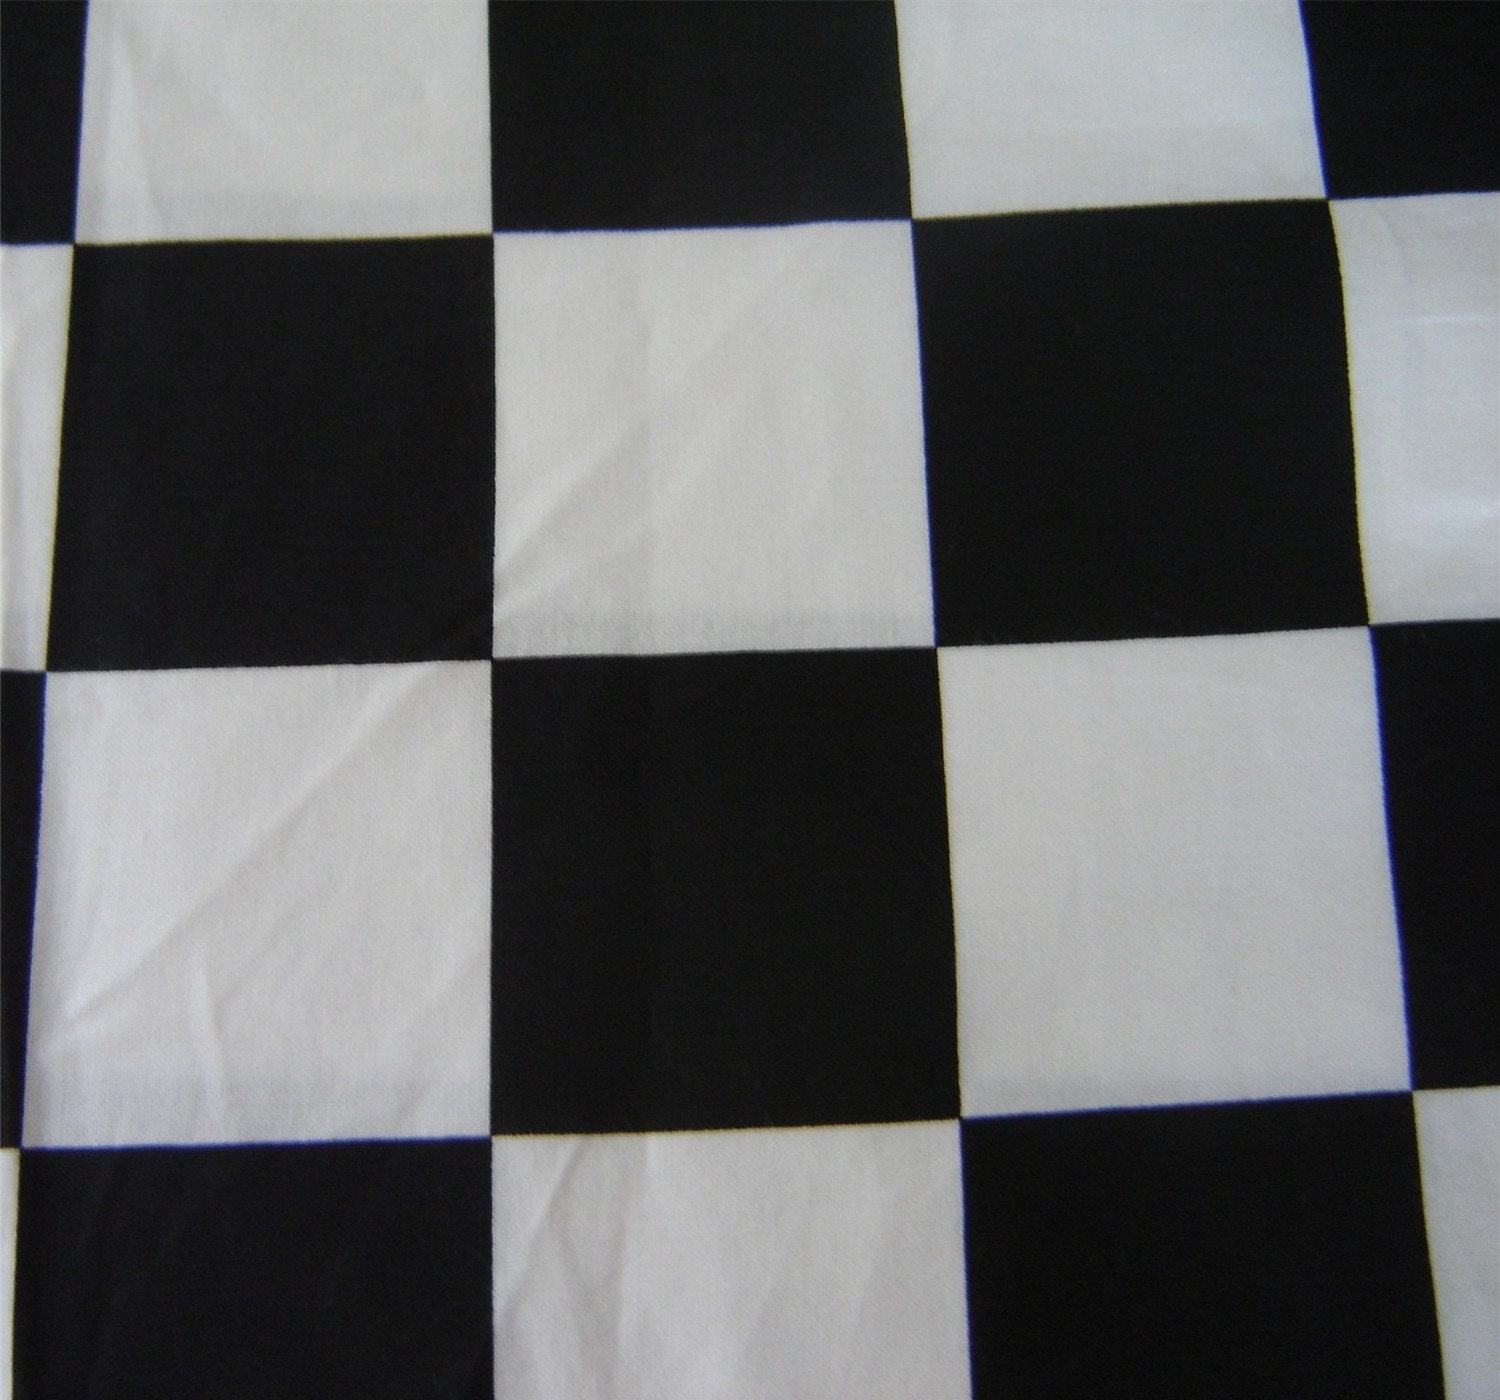 checkered flag fabric